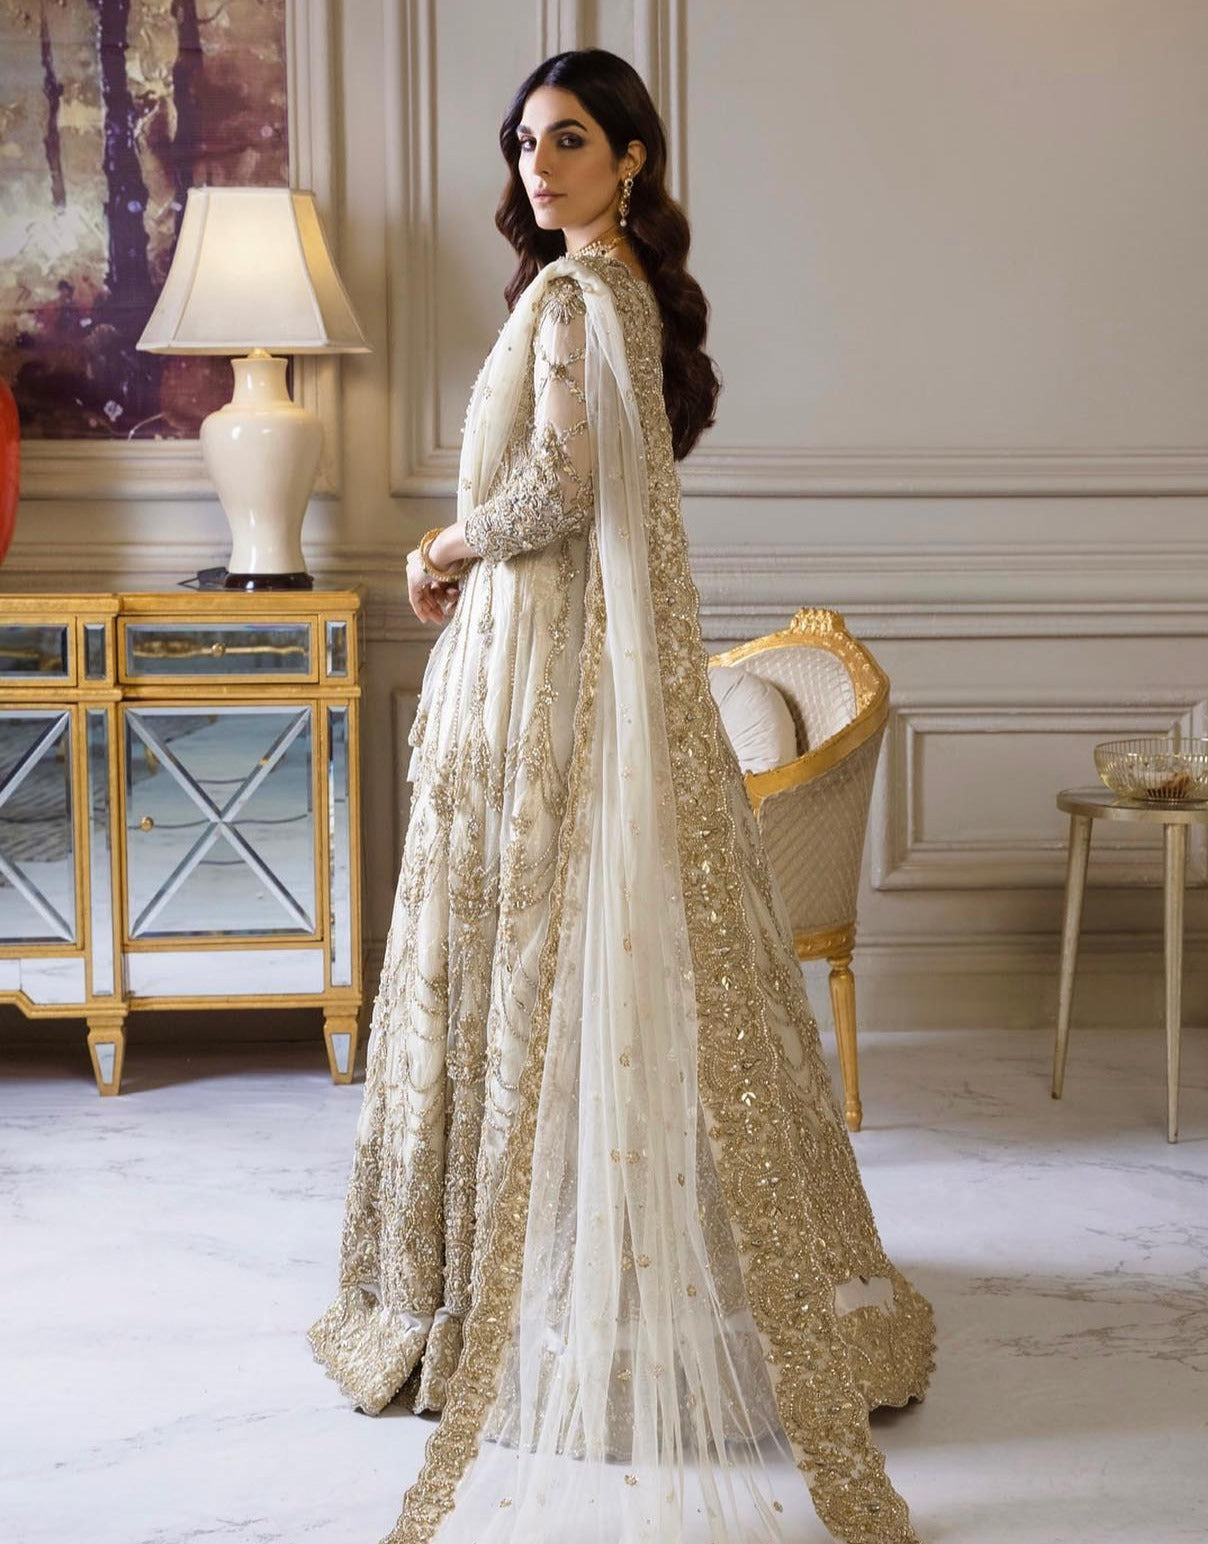 Royal Pakistani Bridal Dress in Lehenga Frock Style – Nameera by Farooq